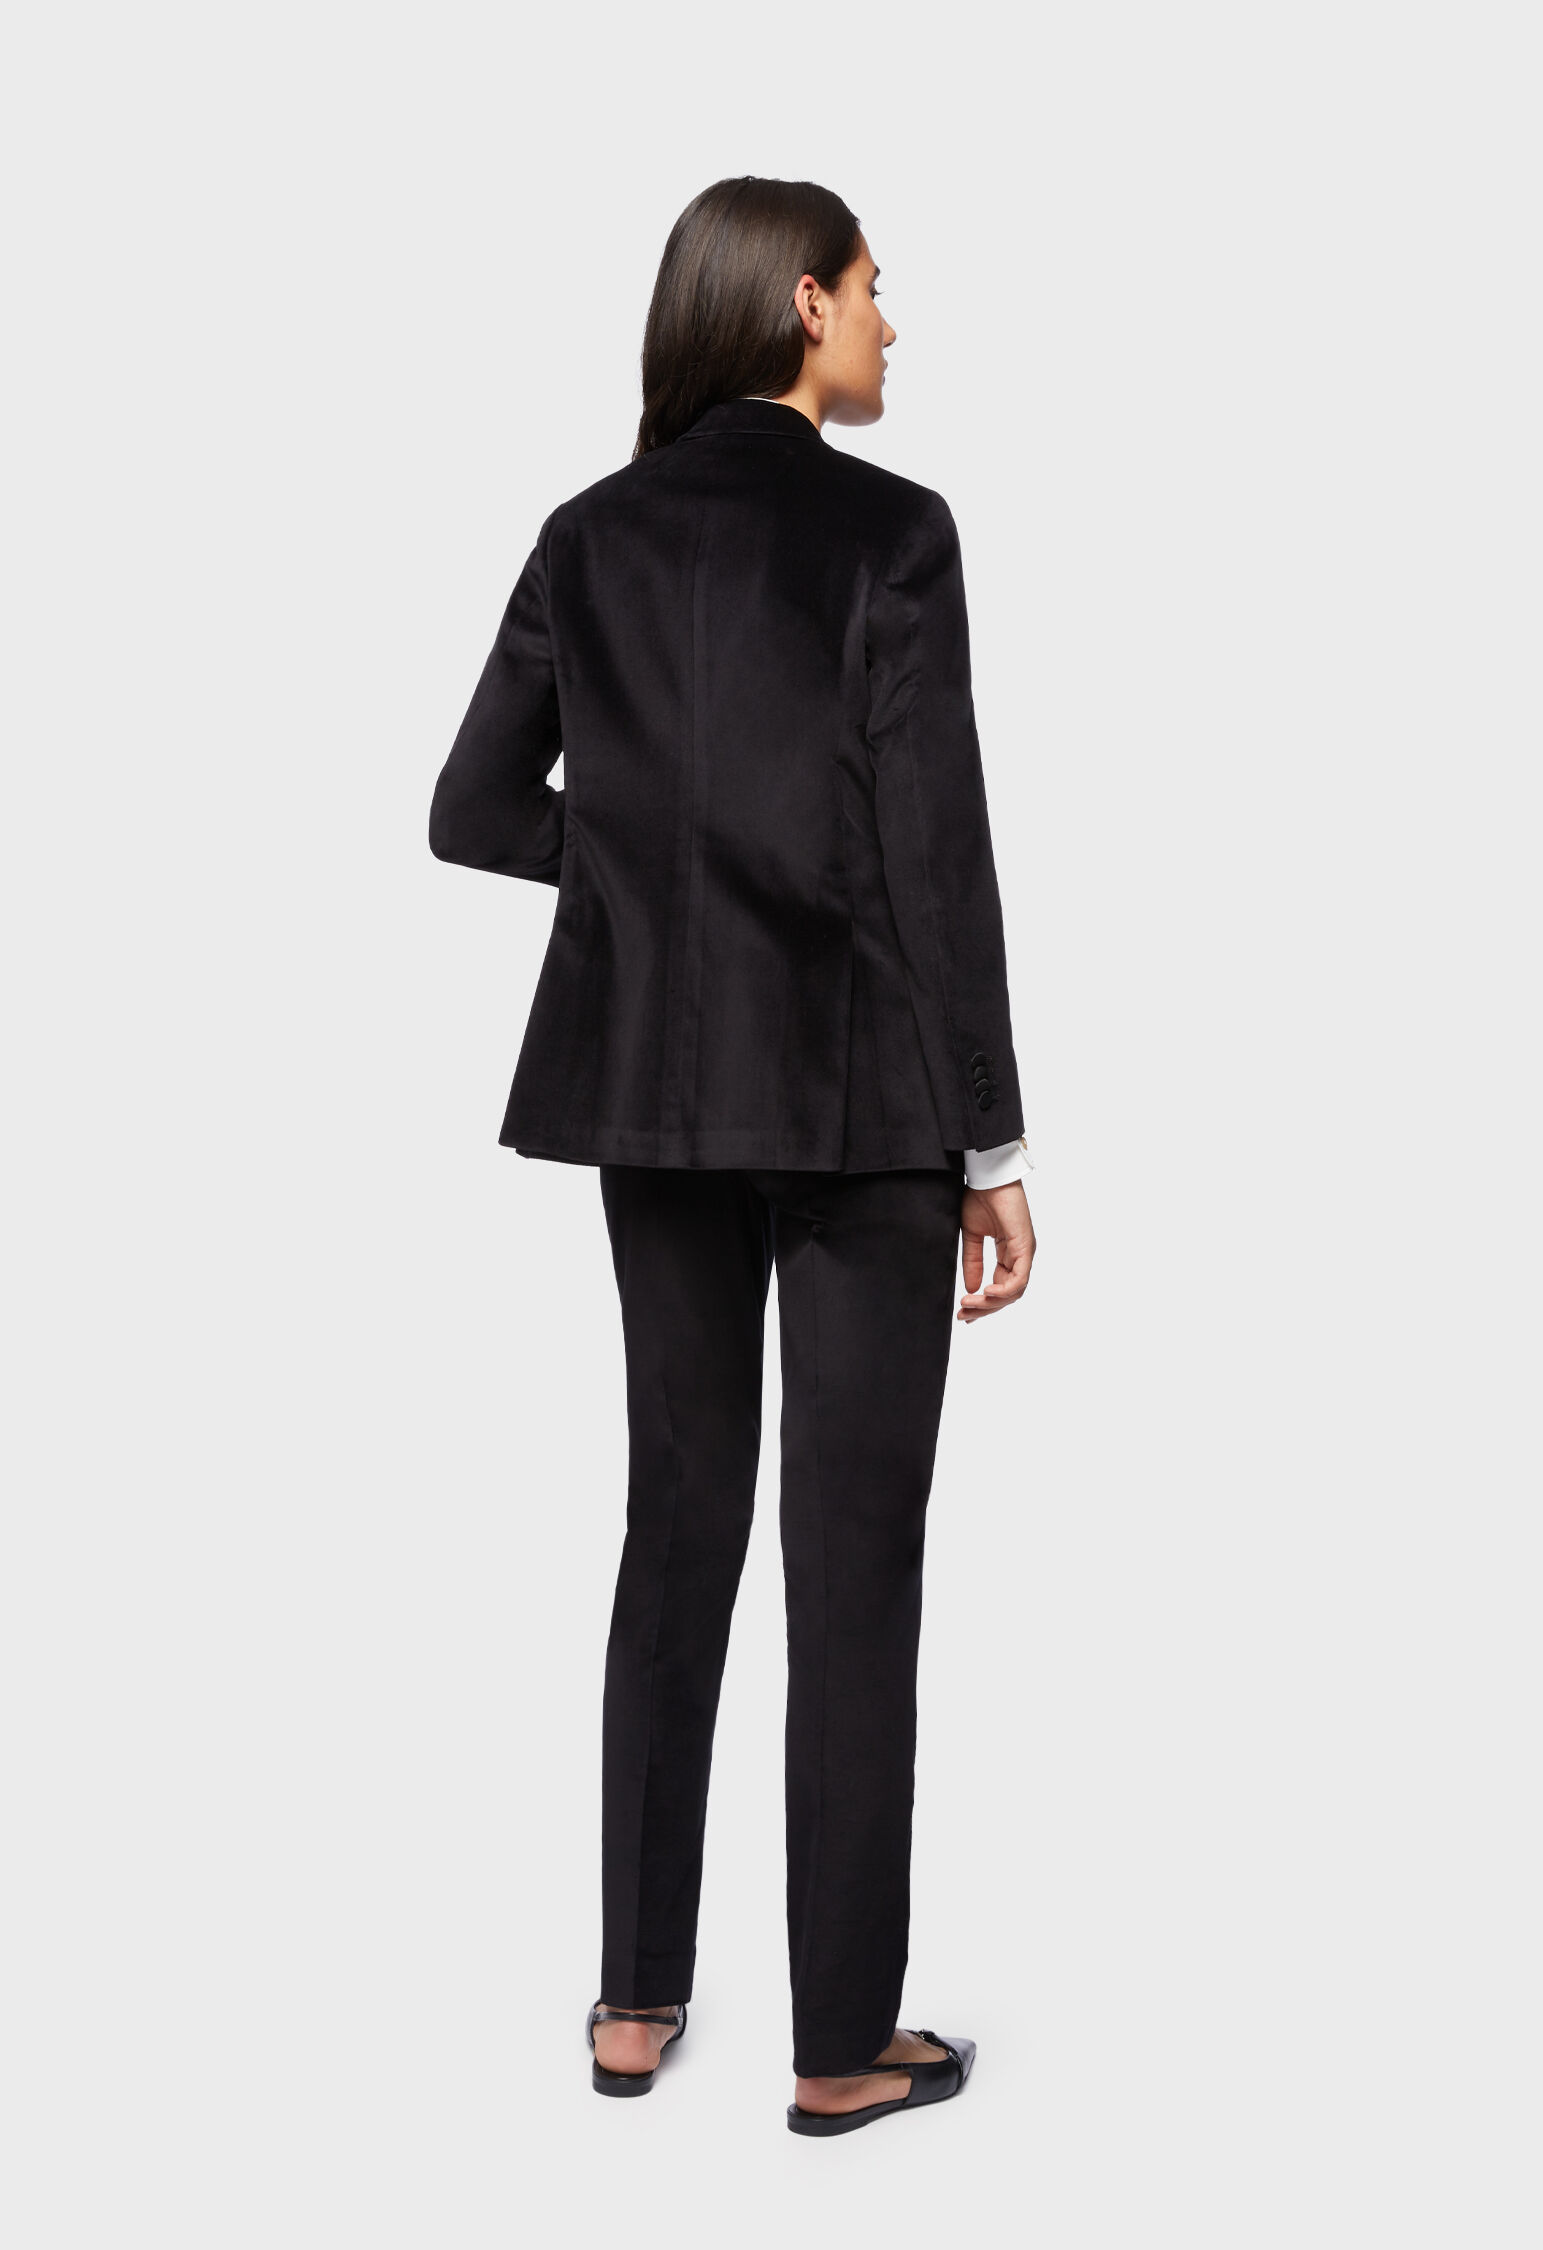 C Kilkenny Black Trouser Suit — Fusion Fashion Moycullen